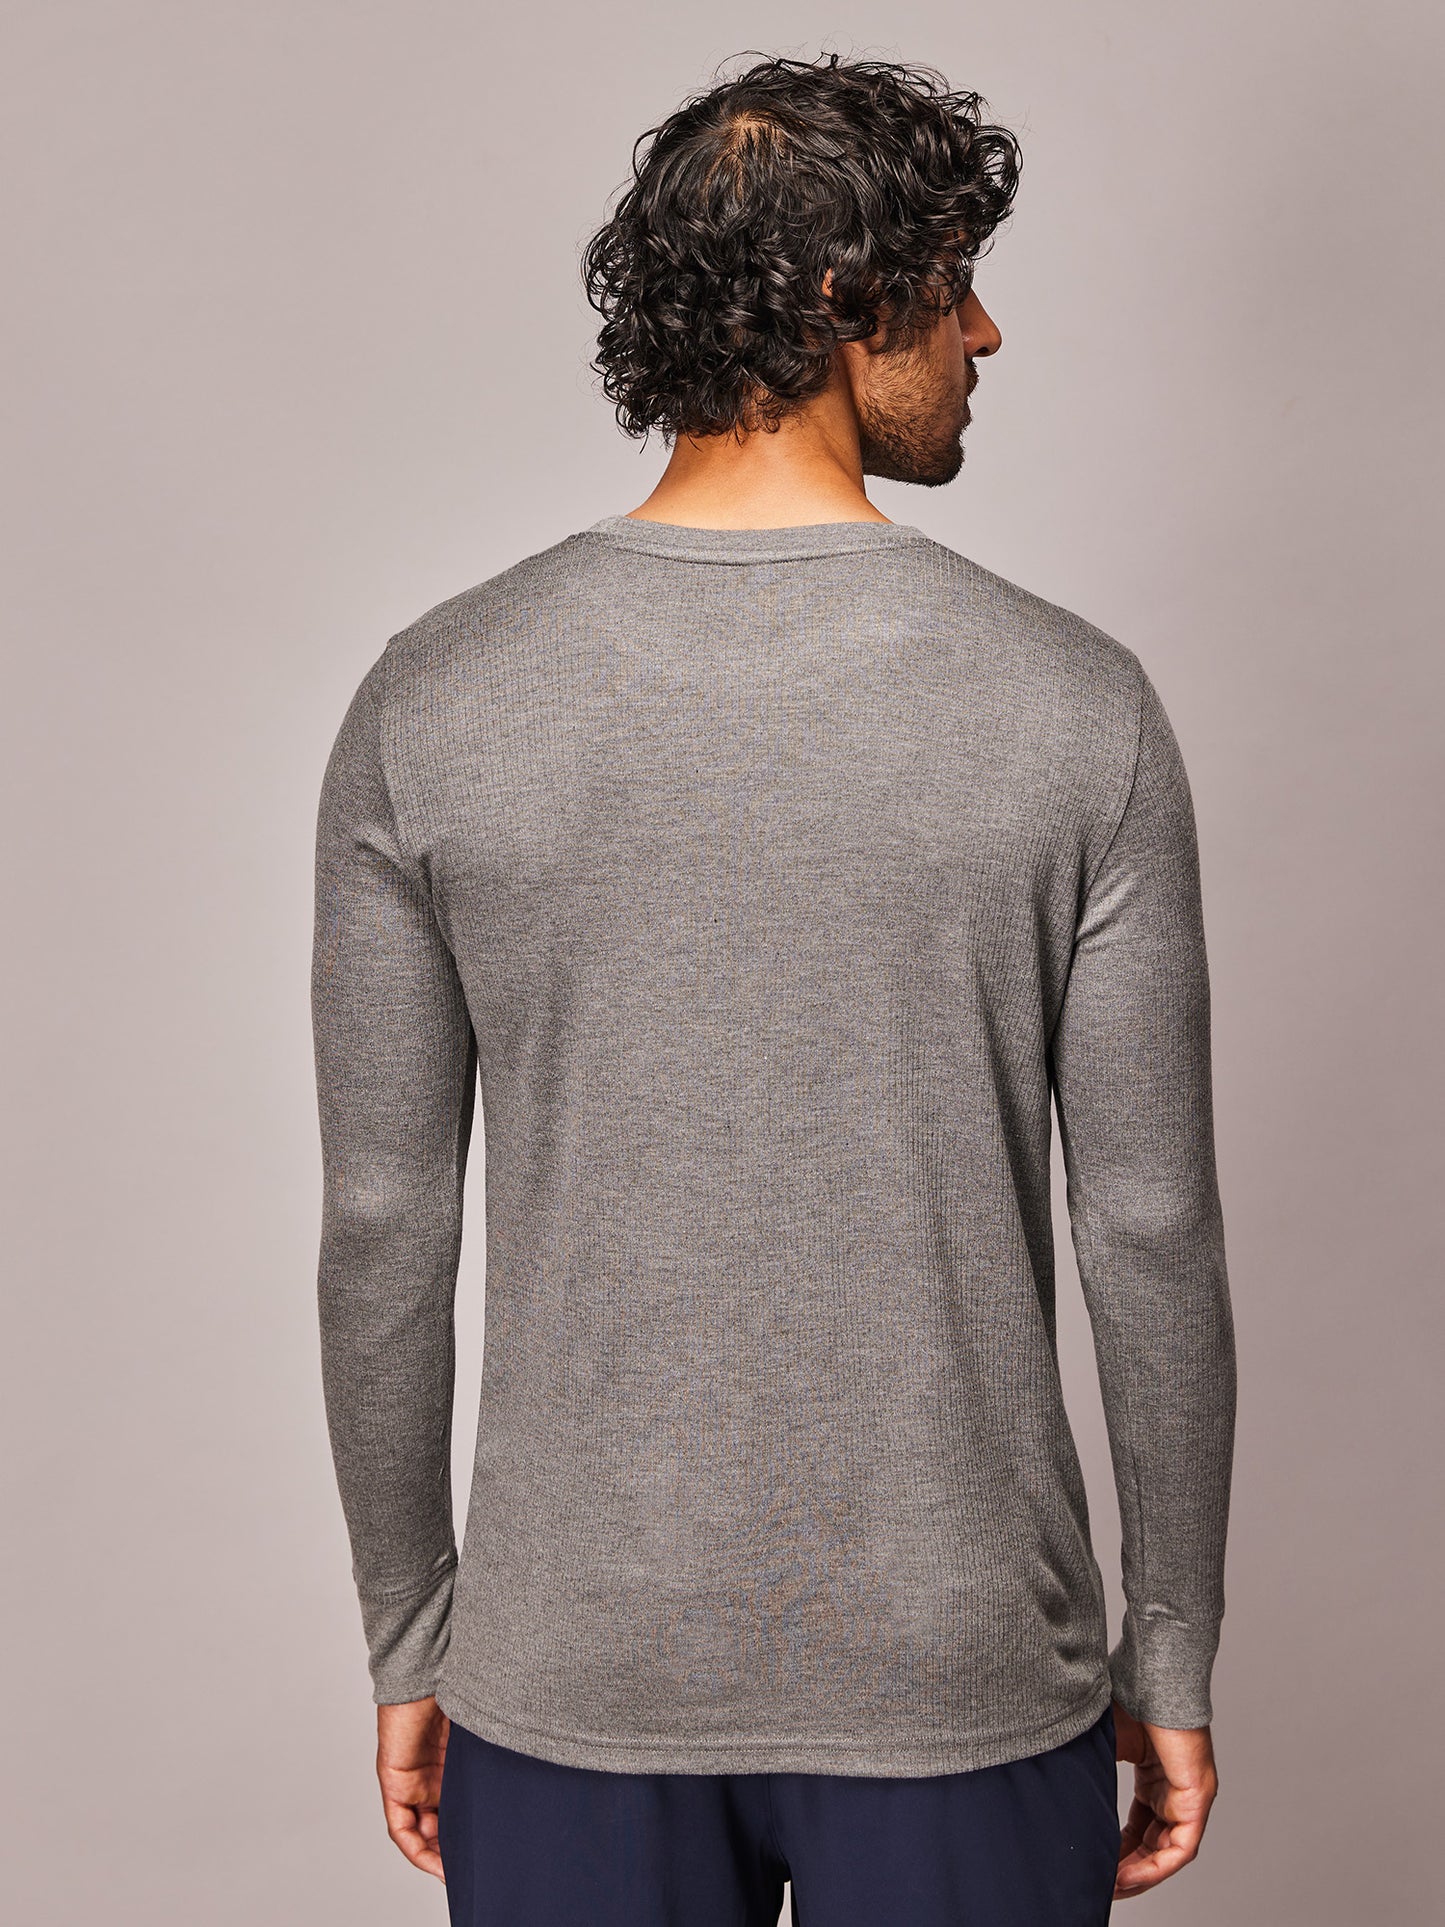 Gloot Men's High-End Acrylic Viscose Long Sleeve Thermal Top Grey Melange